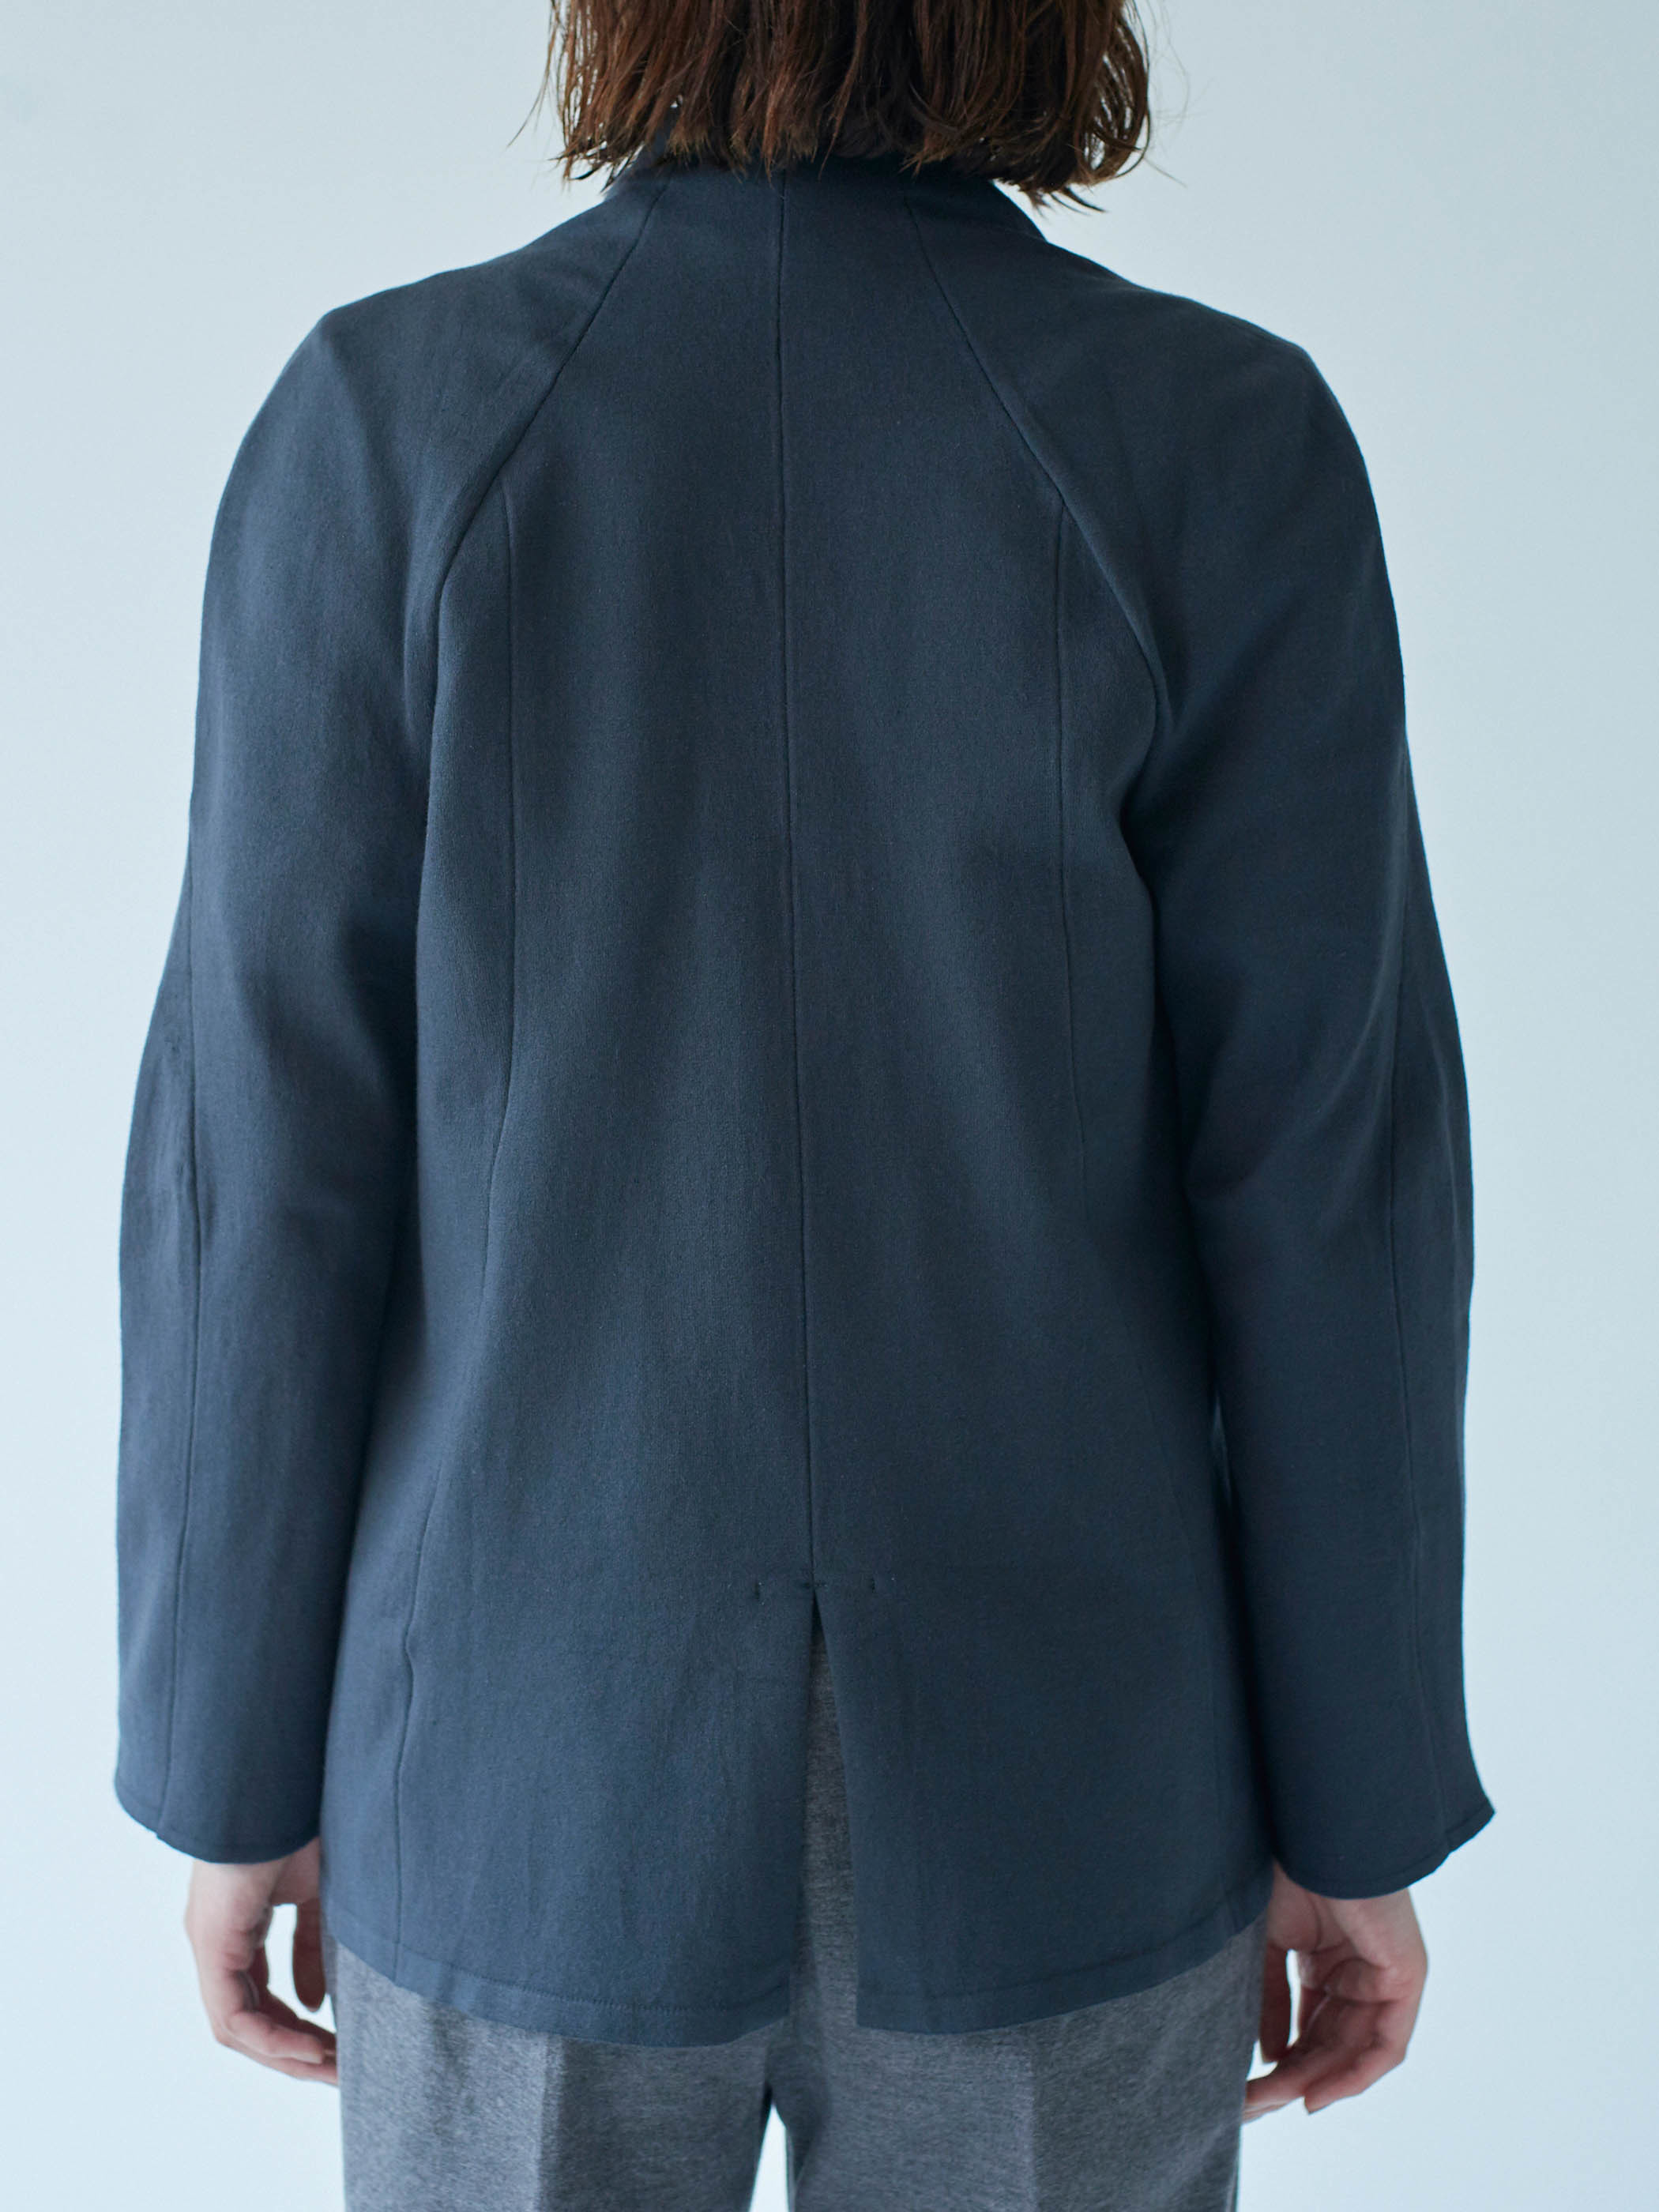 Work Wear collection Women's Jacket Charcoal (ジャケット・チャコール)